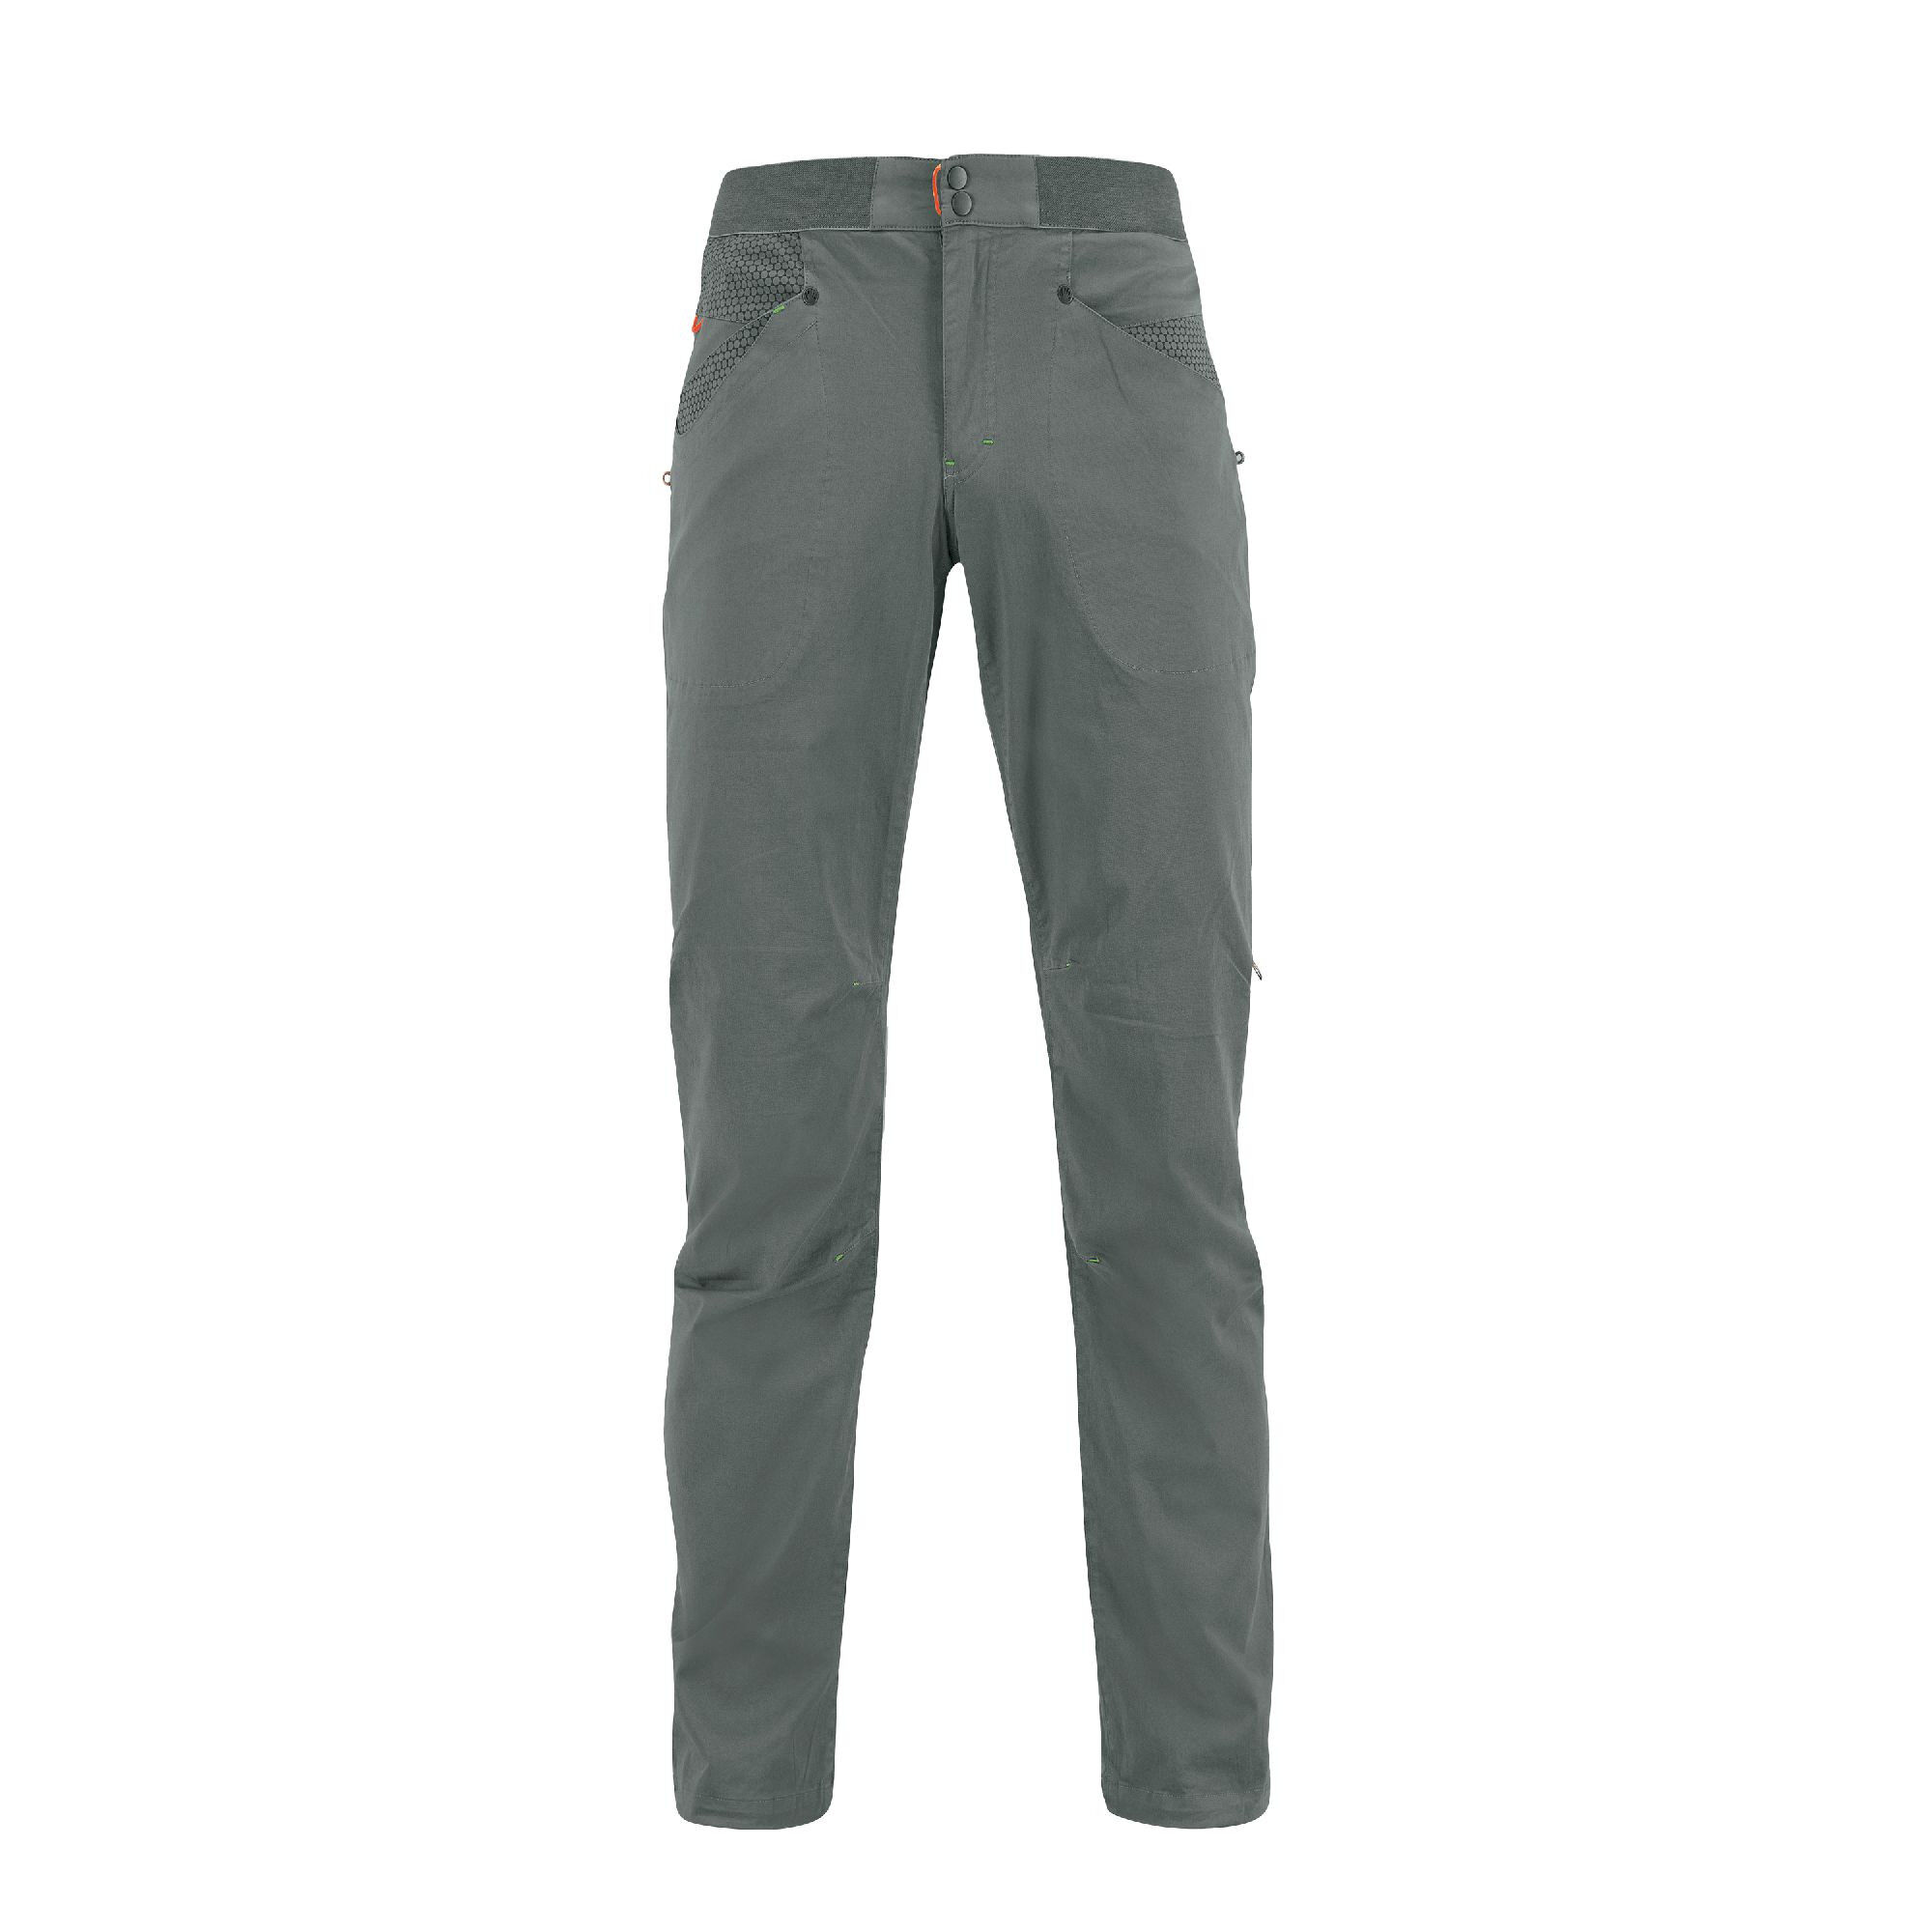 Karpos Noghera Pant - Climbing trousers - Men's